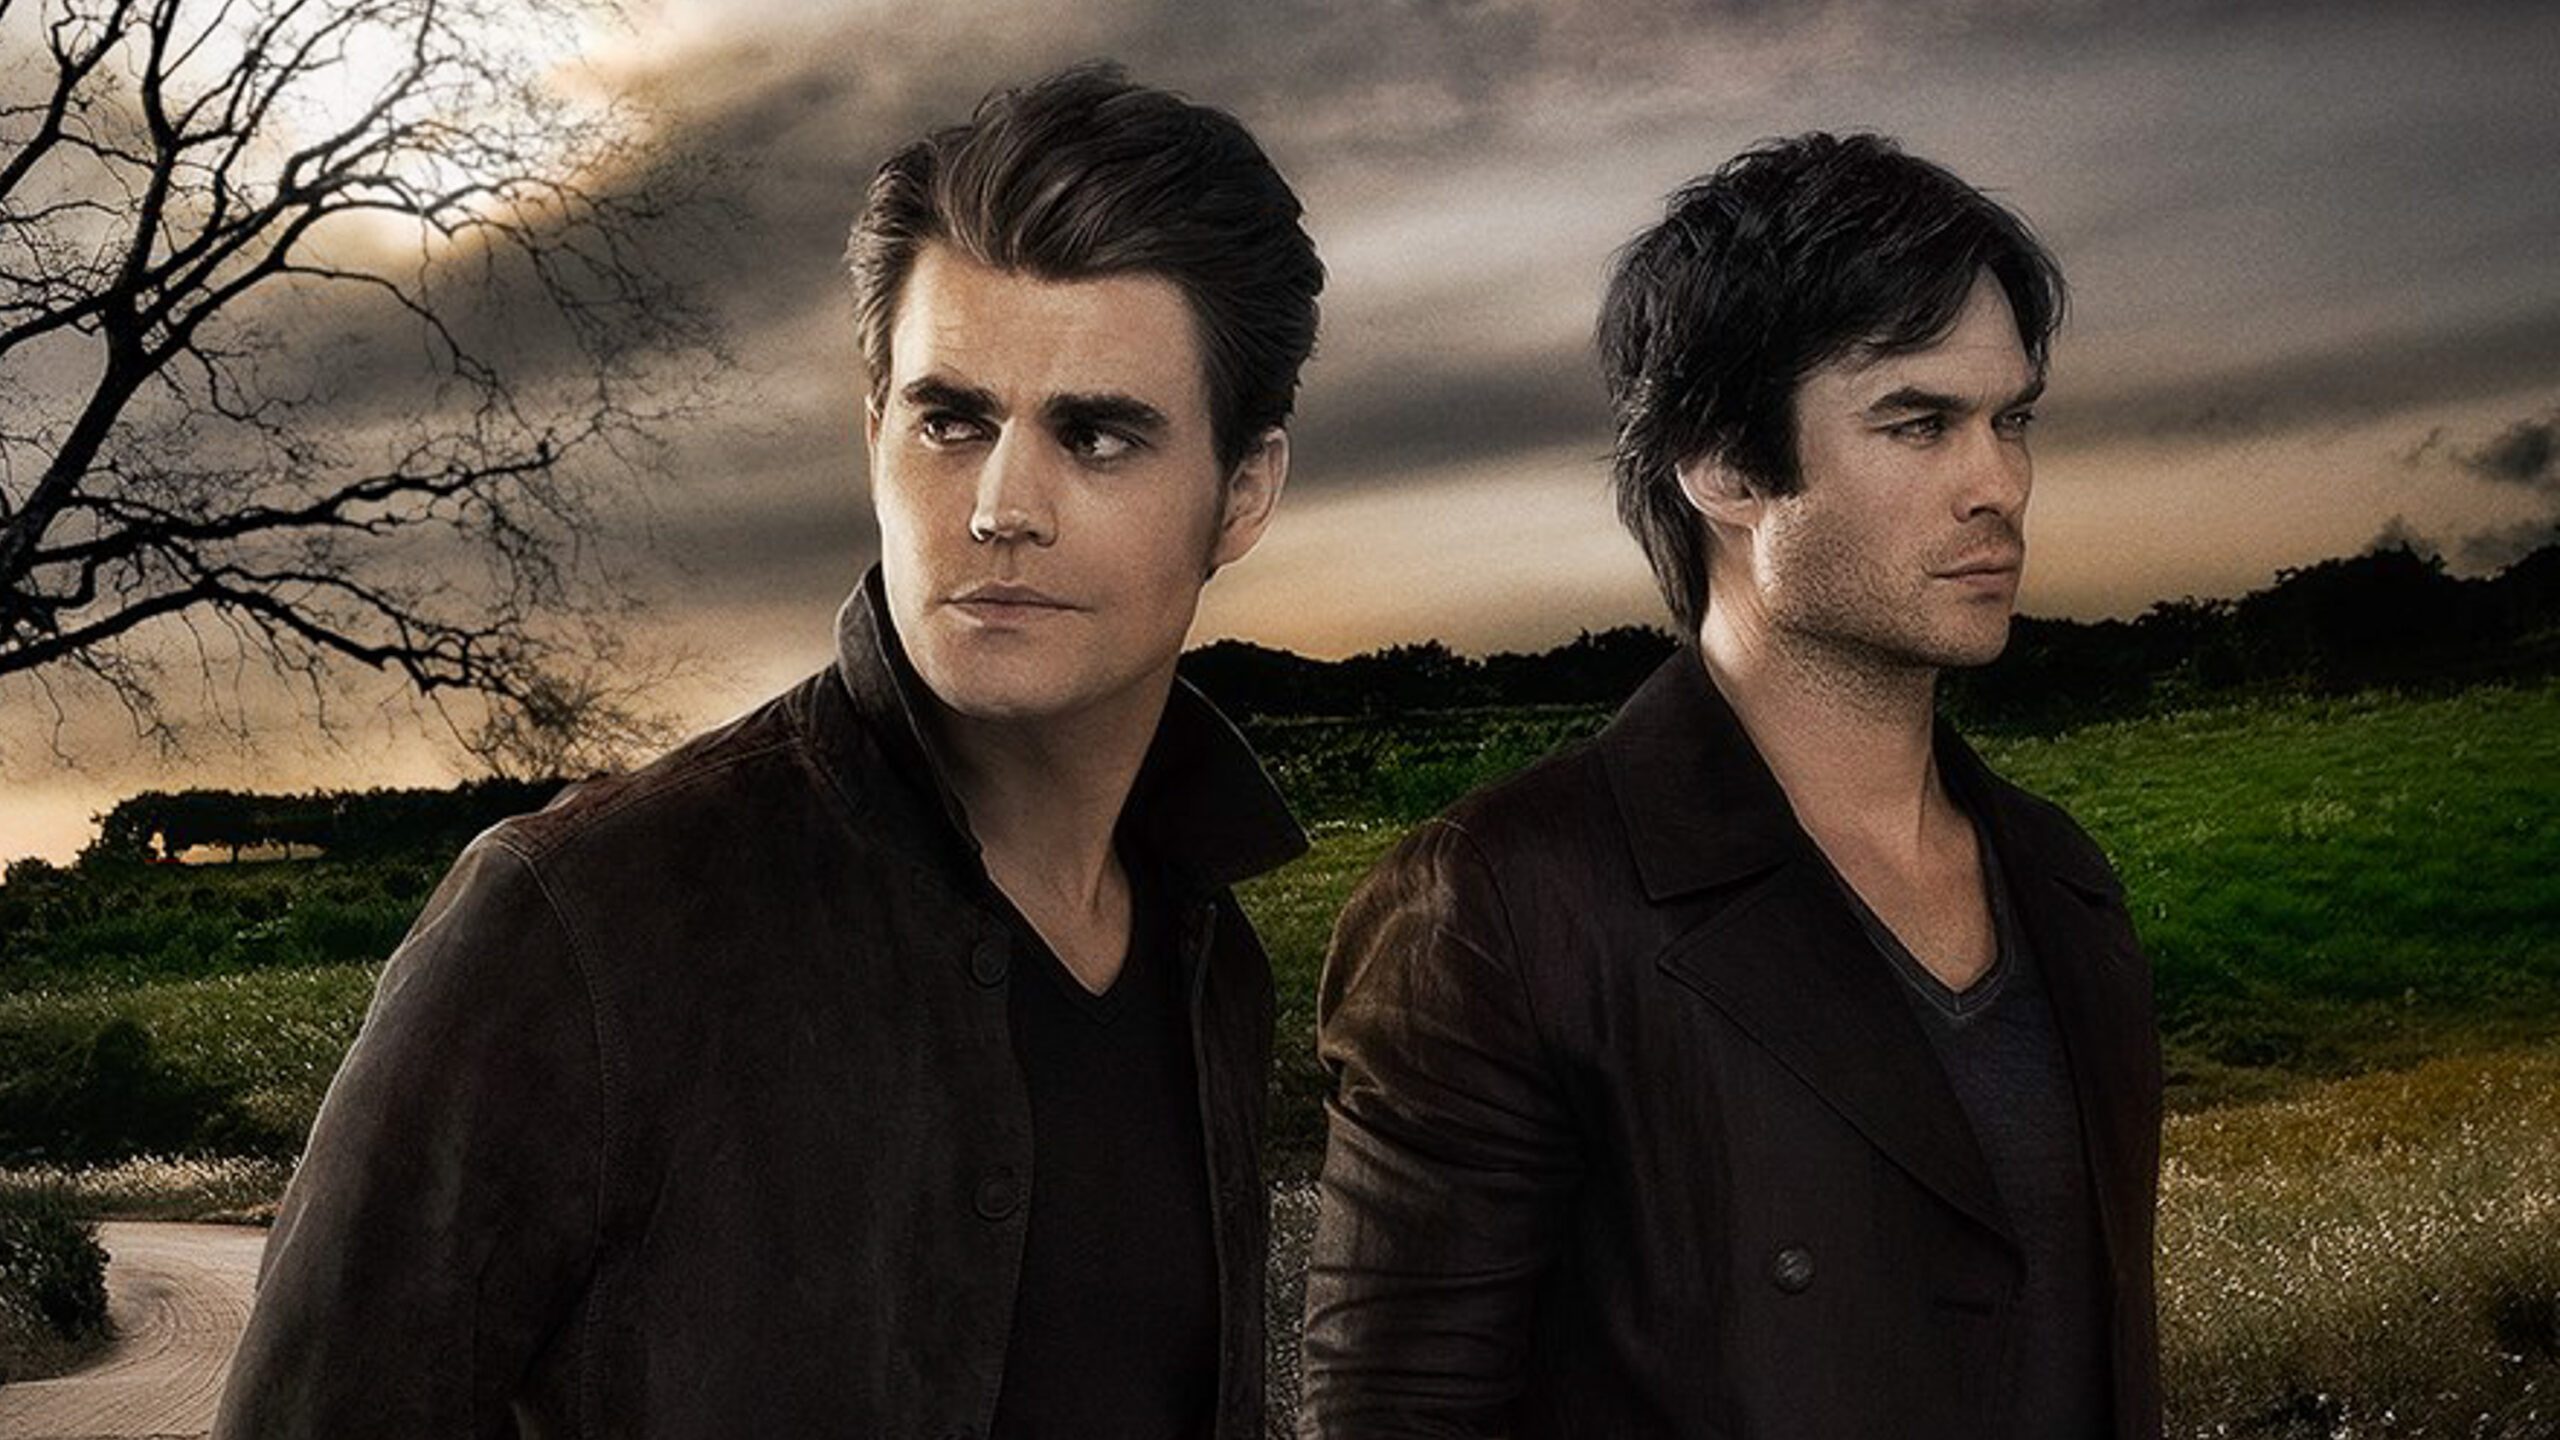 ‘The Vampire Diaries’ creators reveal alternate series ending